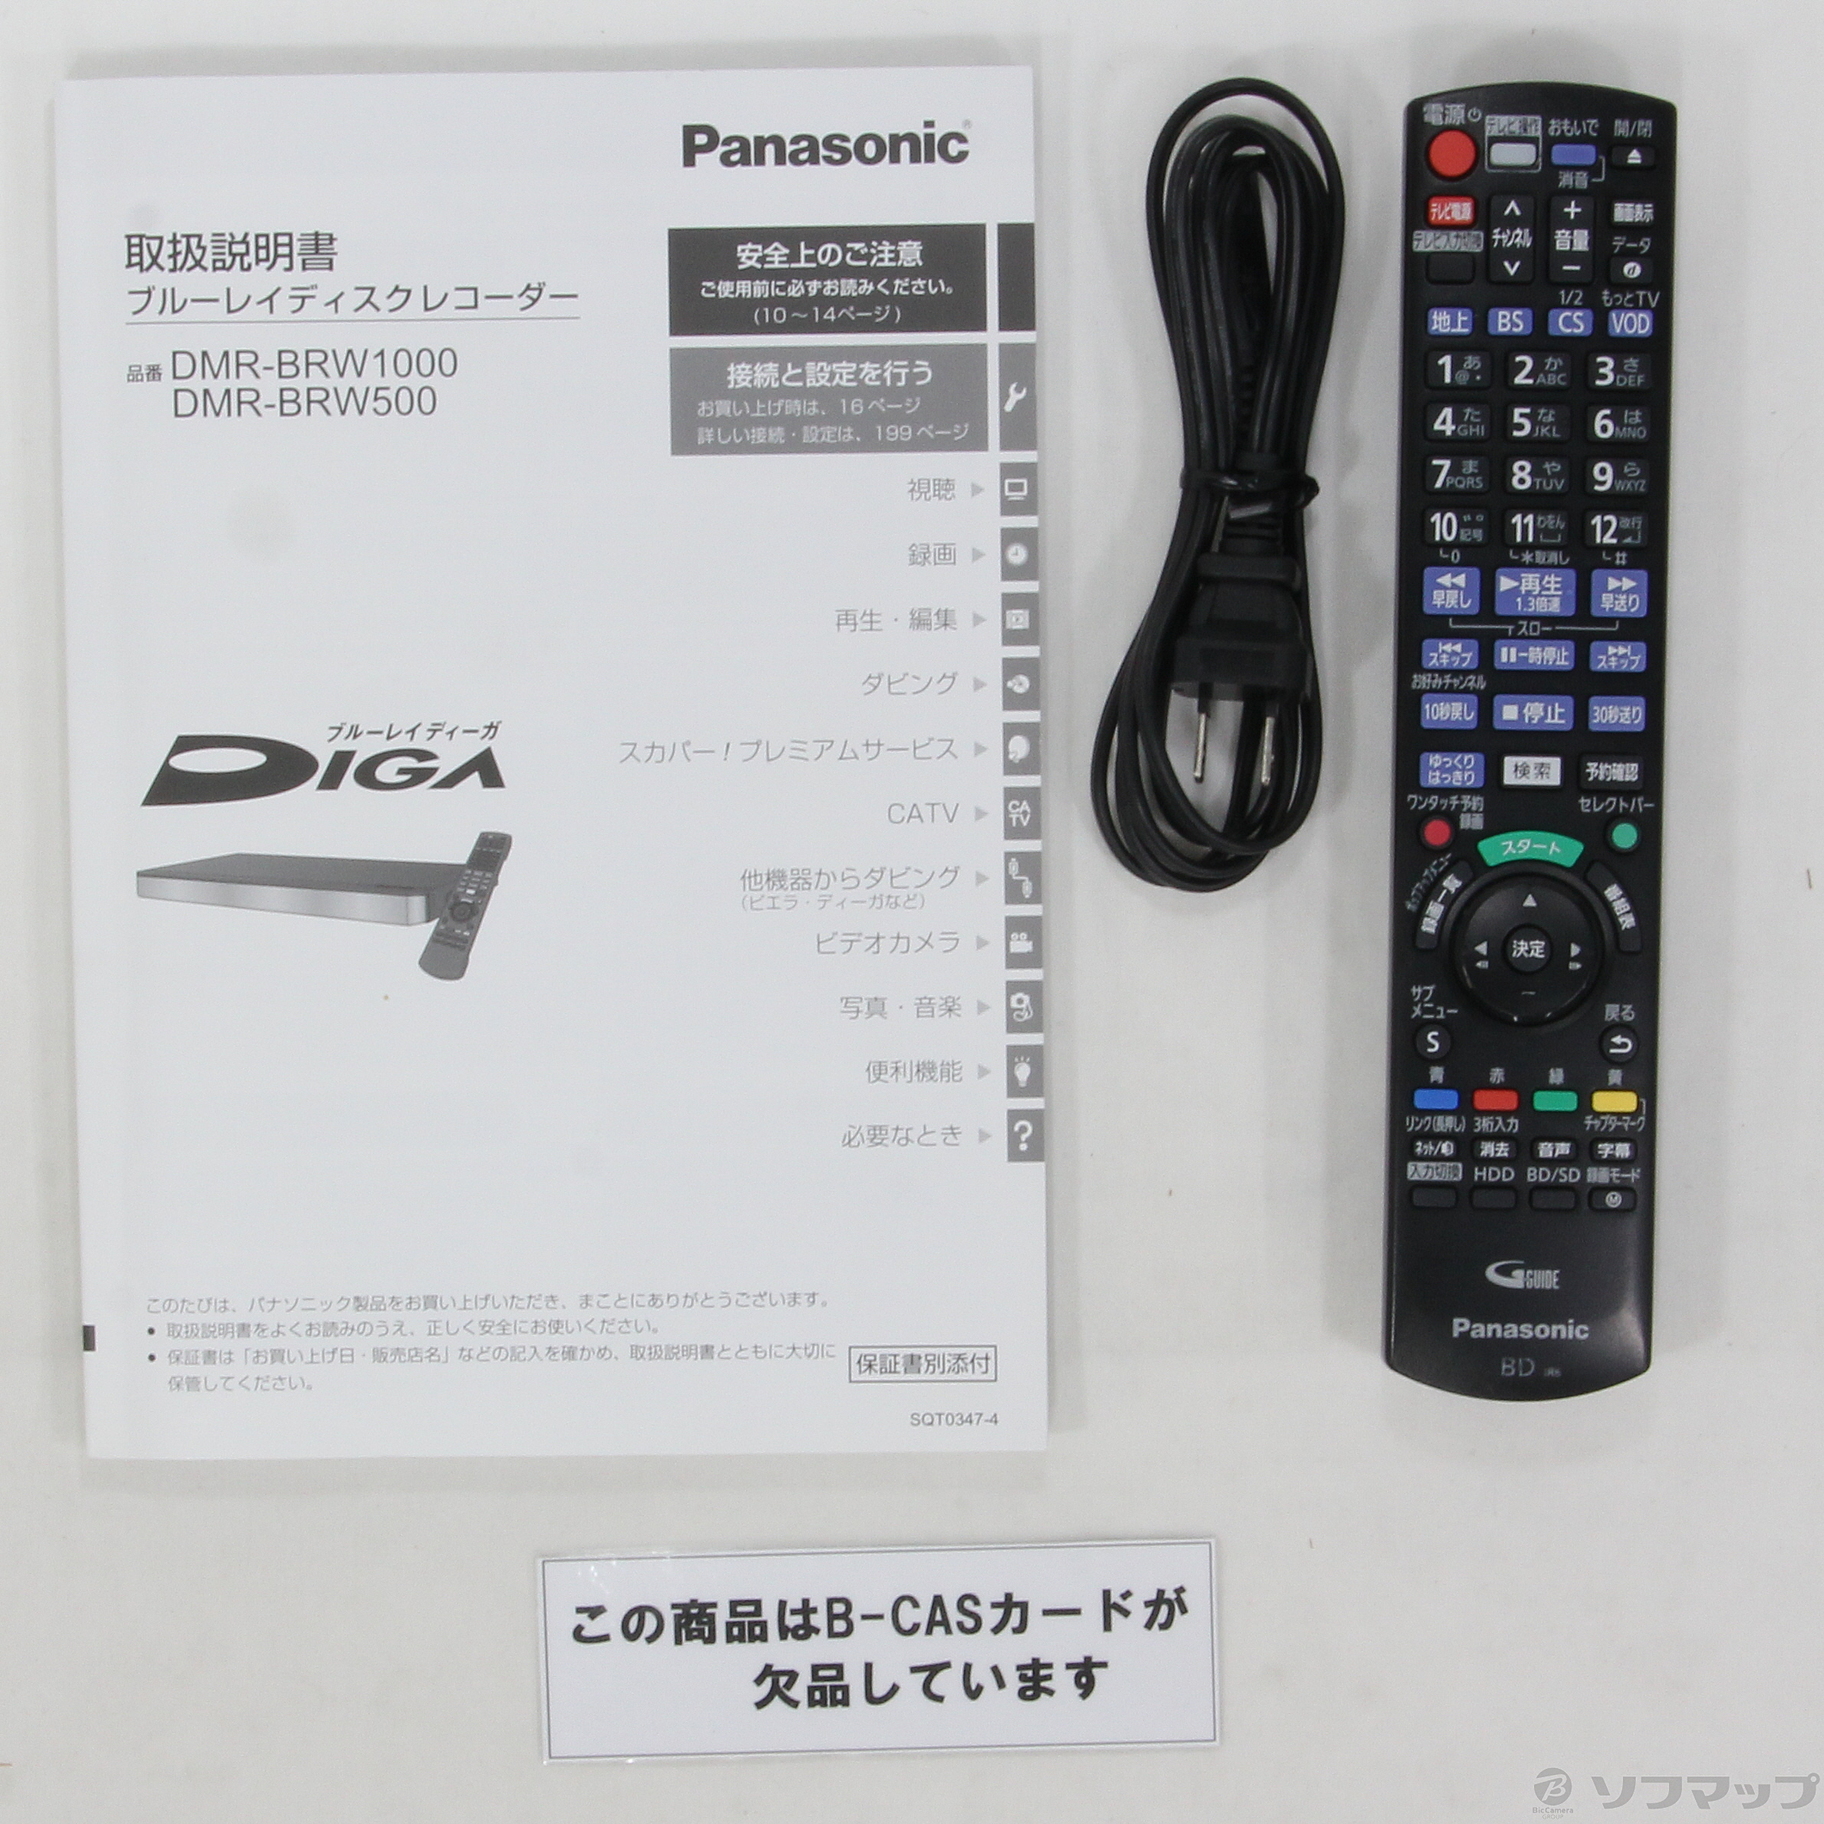 Panasonic ブルーレイ DIGA DMR-BRW1000 - ブルーレイレコーダー